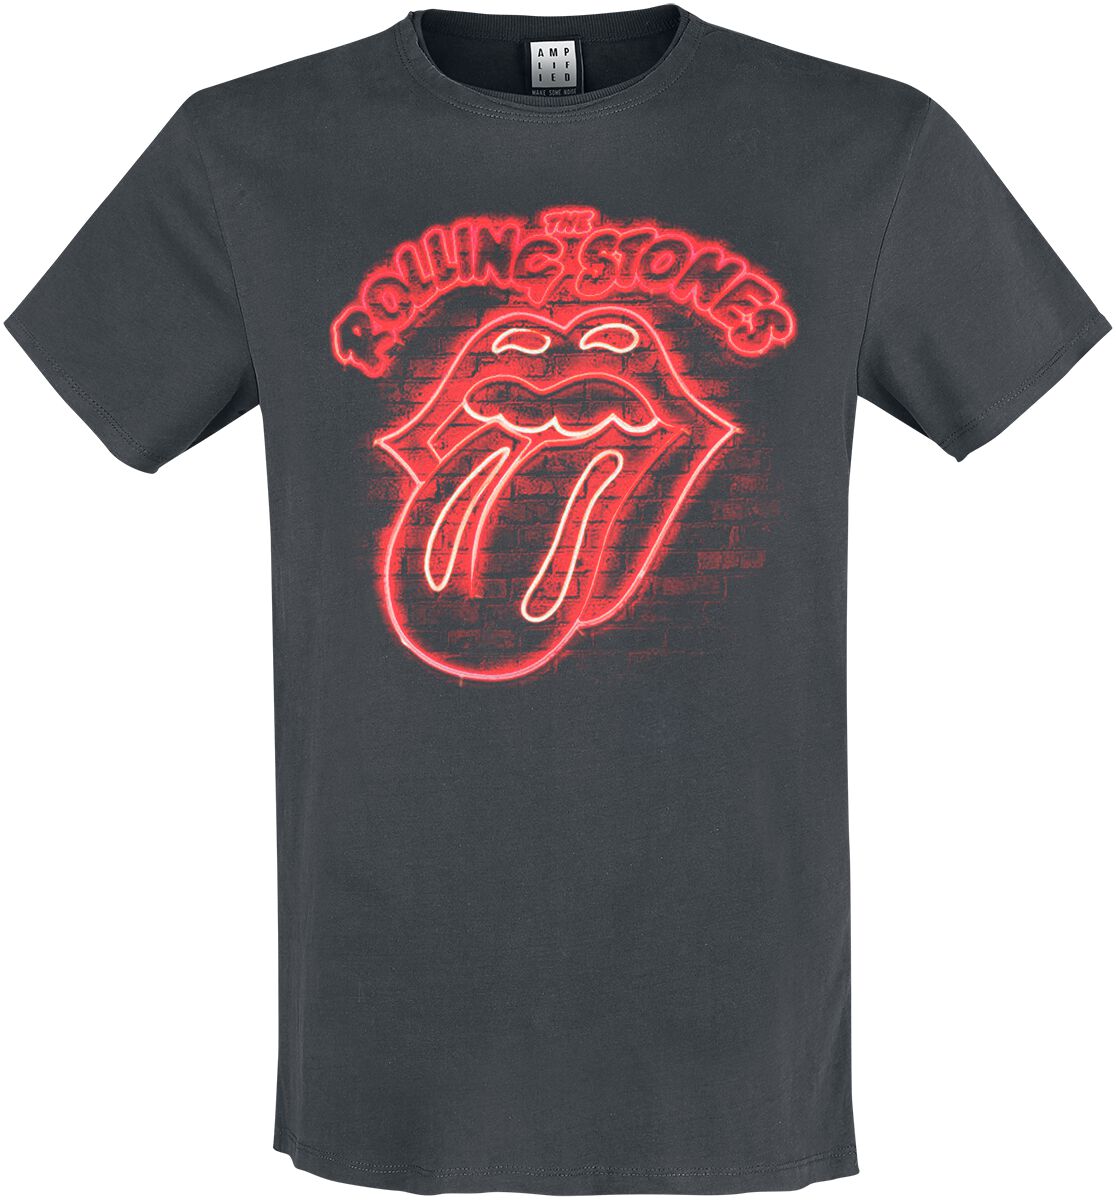 The Rolling Stones T-Shirt - Amplified Collection - Neon Light - S bis XL - für Männer - Größe L - charcoal  - Lizenziertes Merchandise!